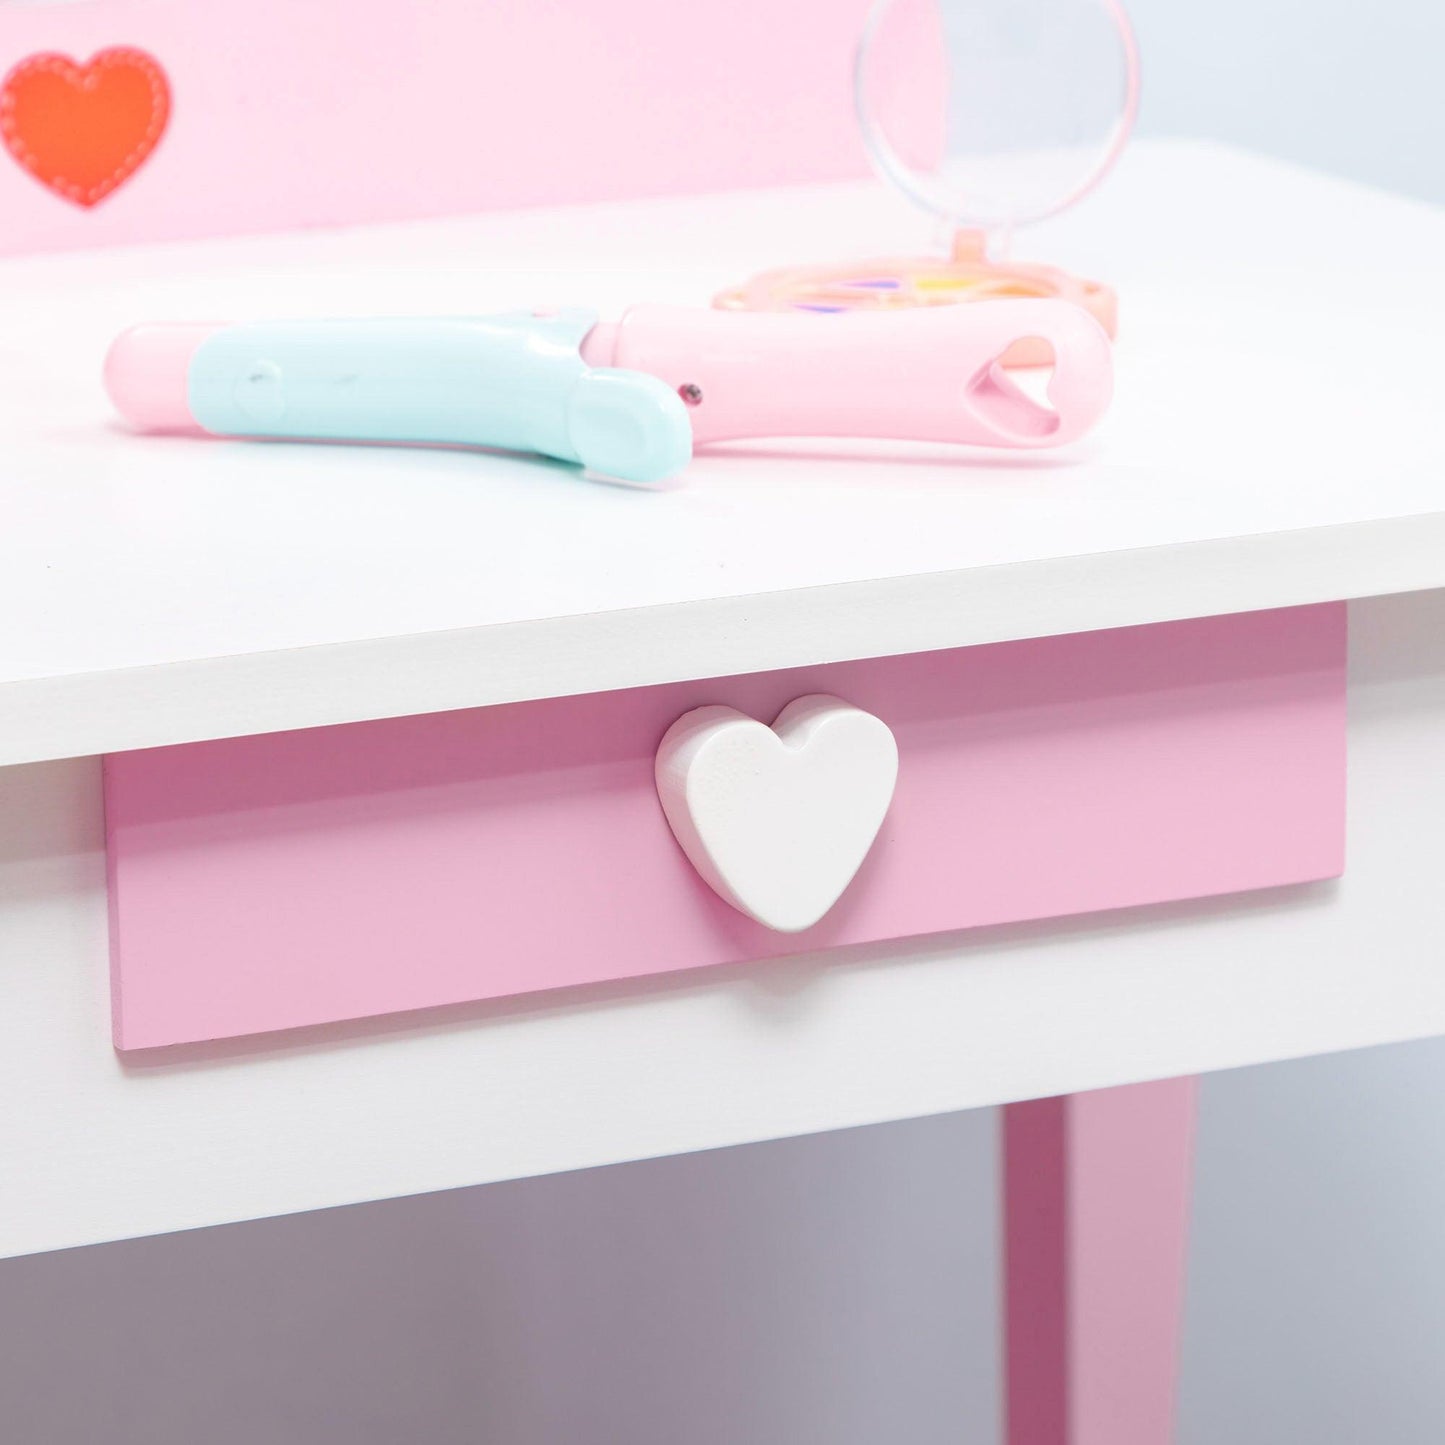 ZONEKIZ 4PCs Kids Bedroom Furniture Set W/ Bed, Toy Box Bench, Dressing Table, Pink